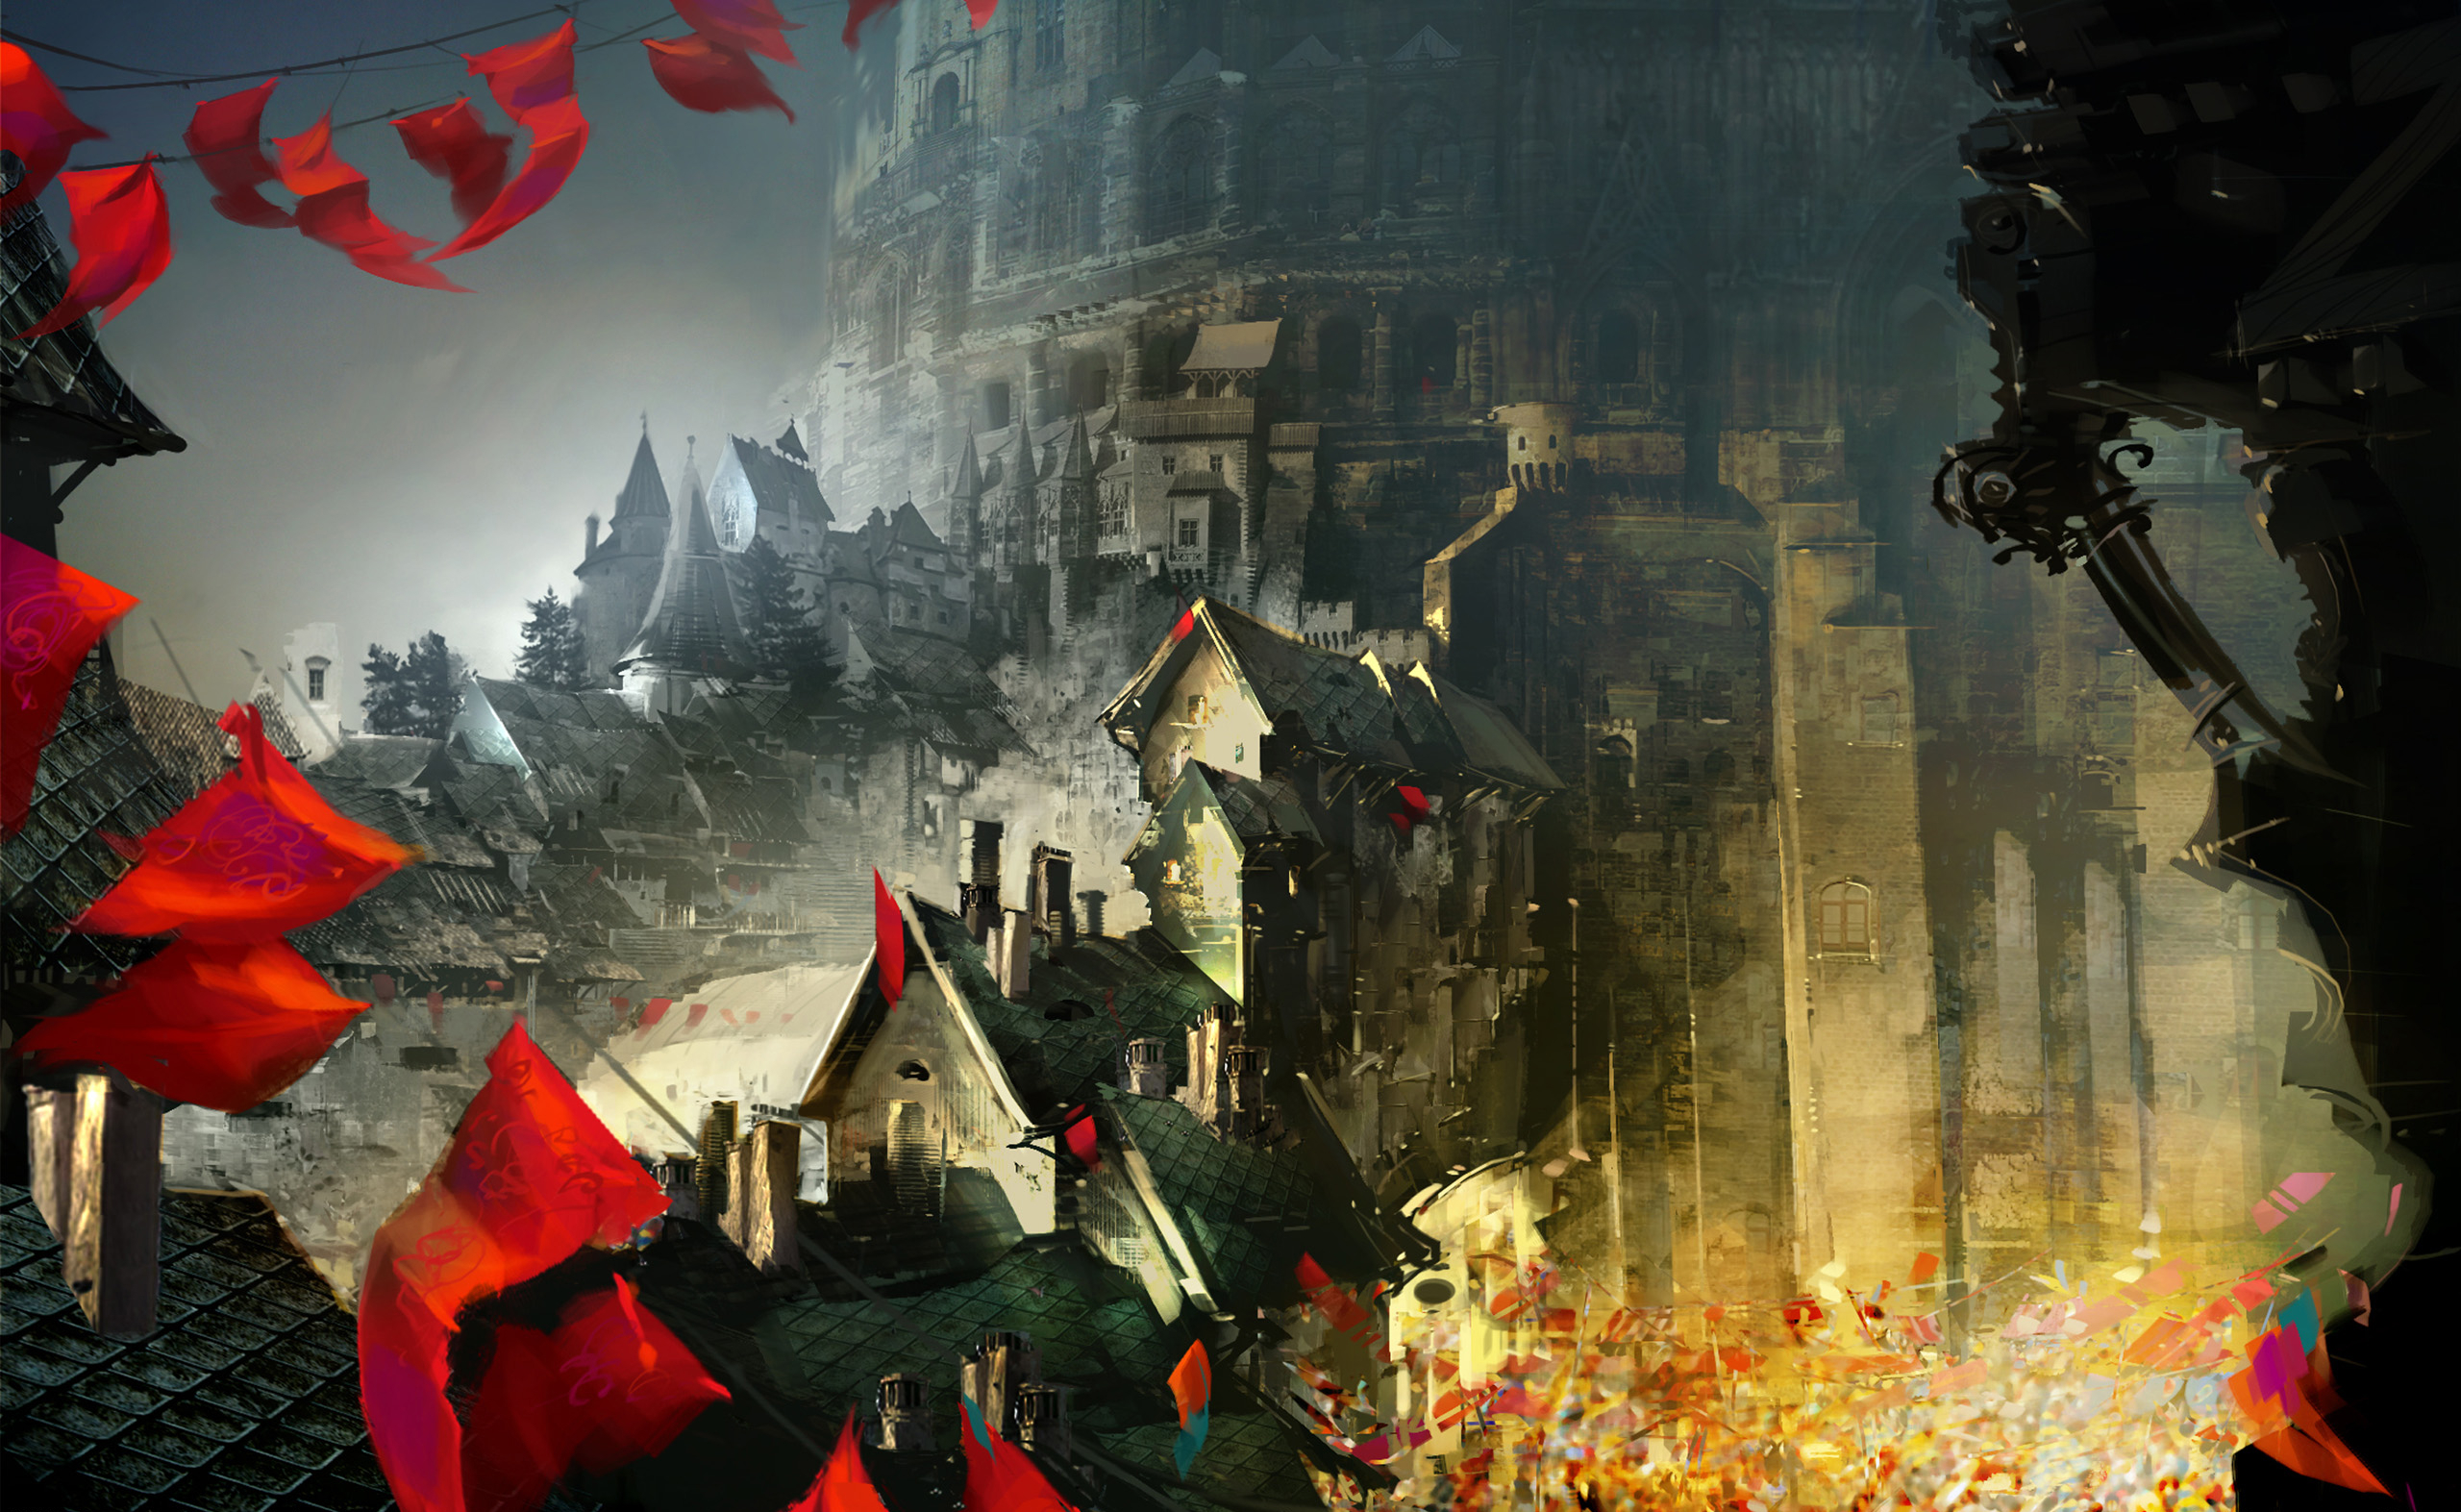 Guild Wars 2 desktop wallpaper featuring a captivating video game scene.